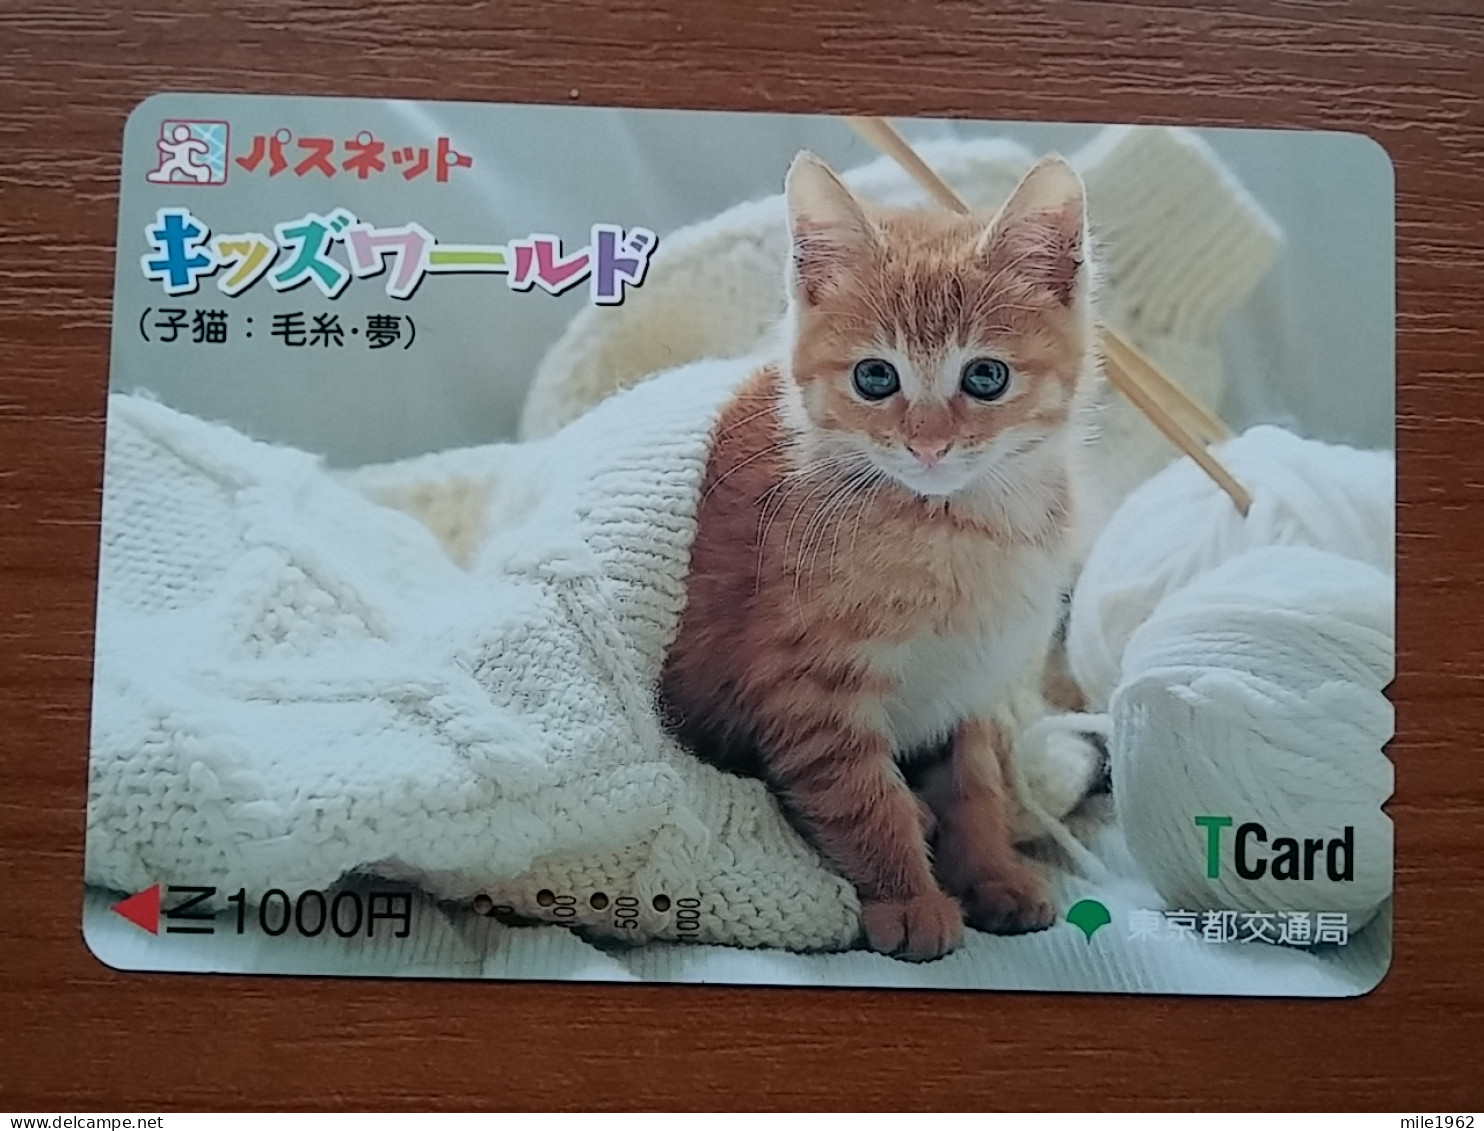 T-402 - JAPAN, Japon, Nipon, Carte Prepayee, Prepaid Card, CAT, CHAT,  - Chats